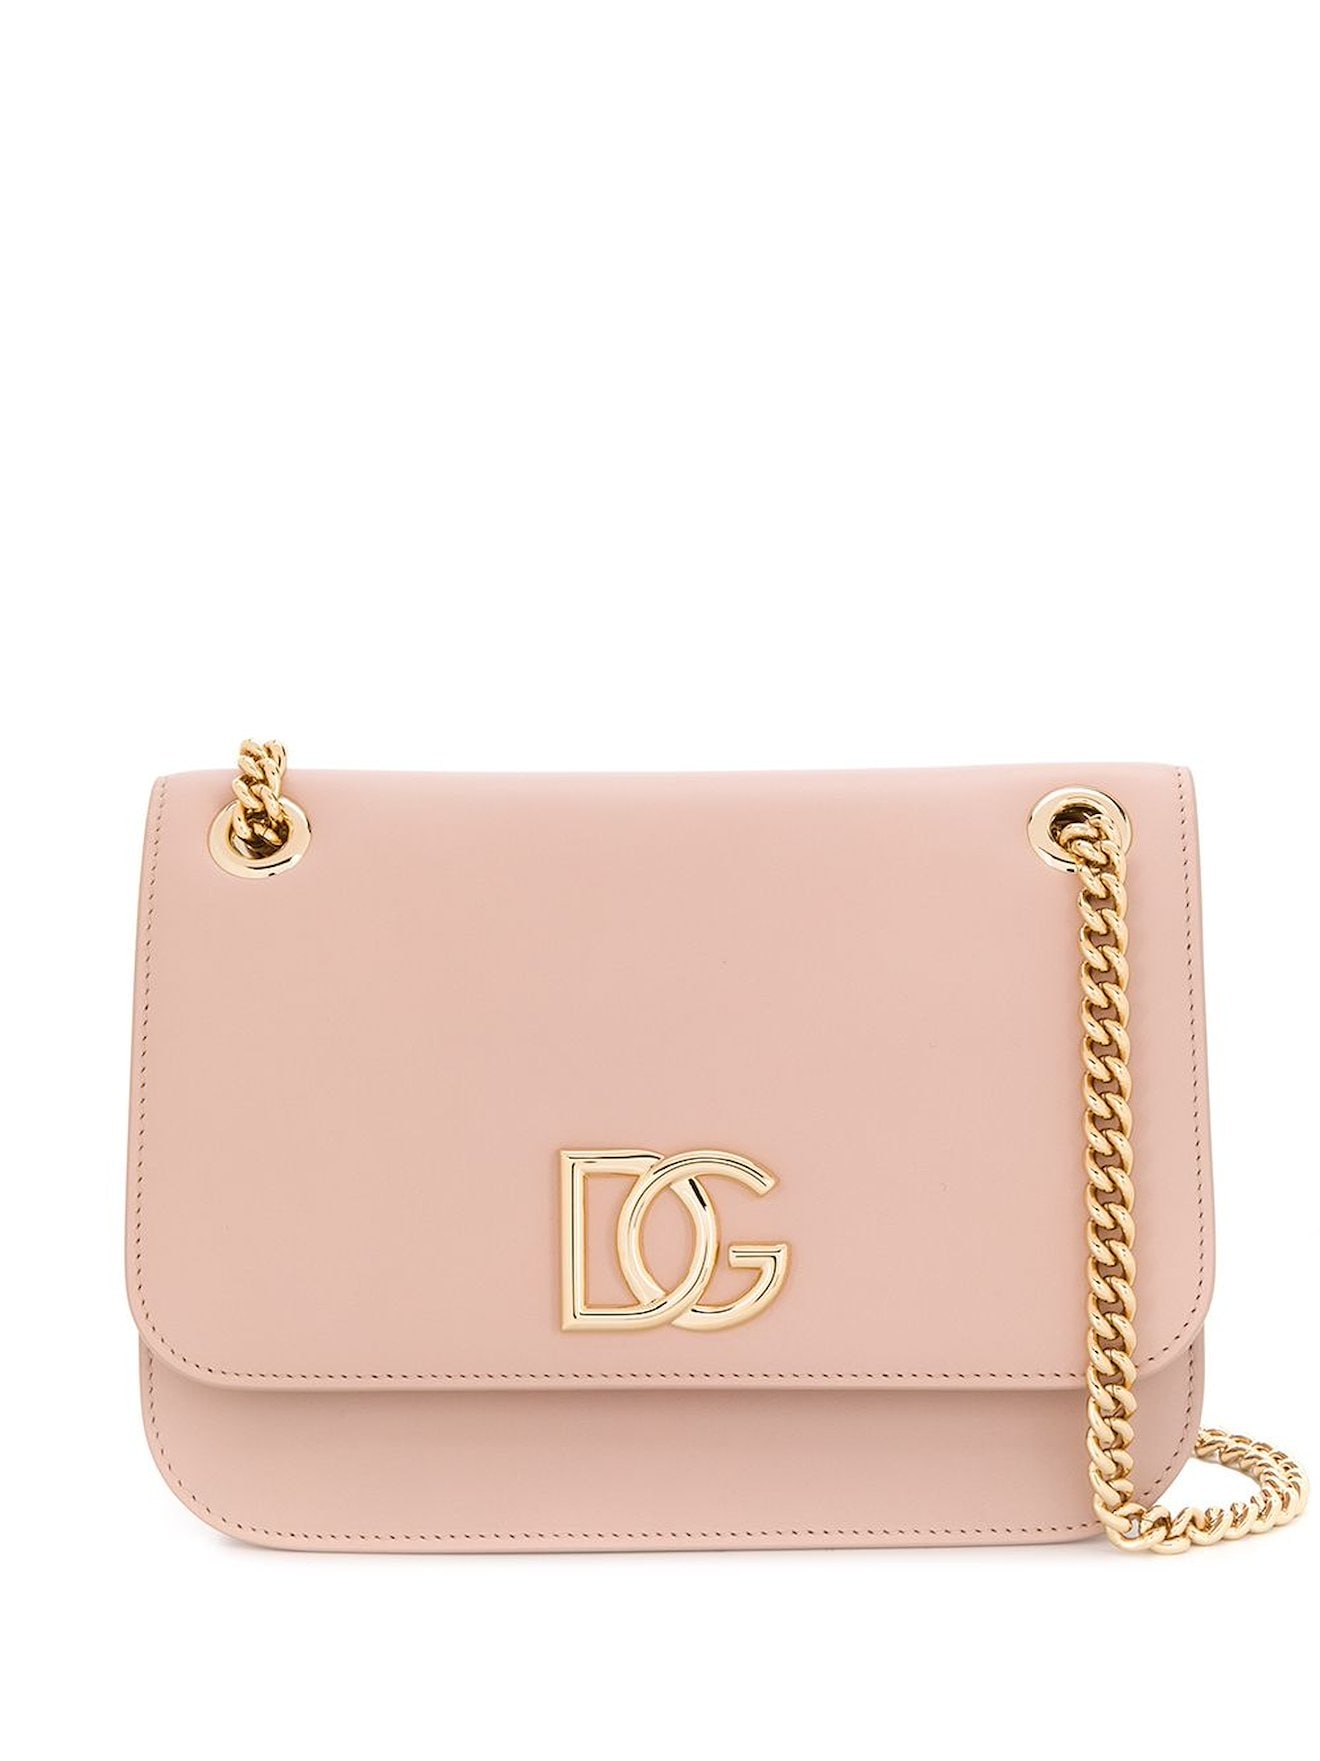 Dolce & Gabbana DG Millennials shoulder bag pink | MODES